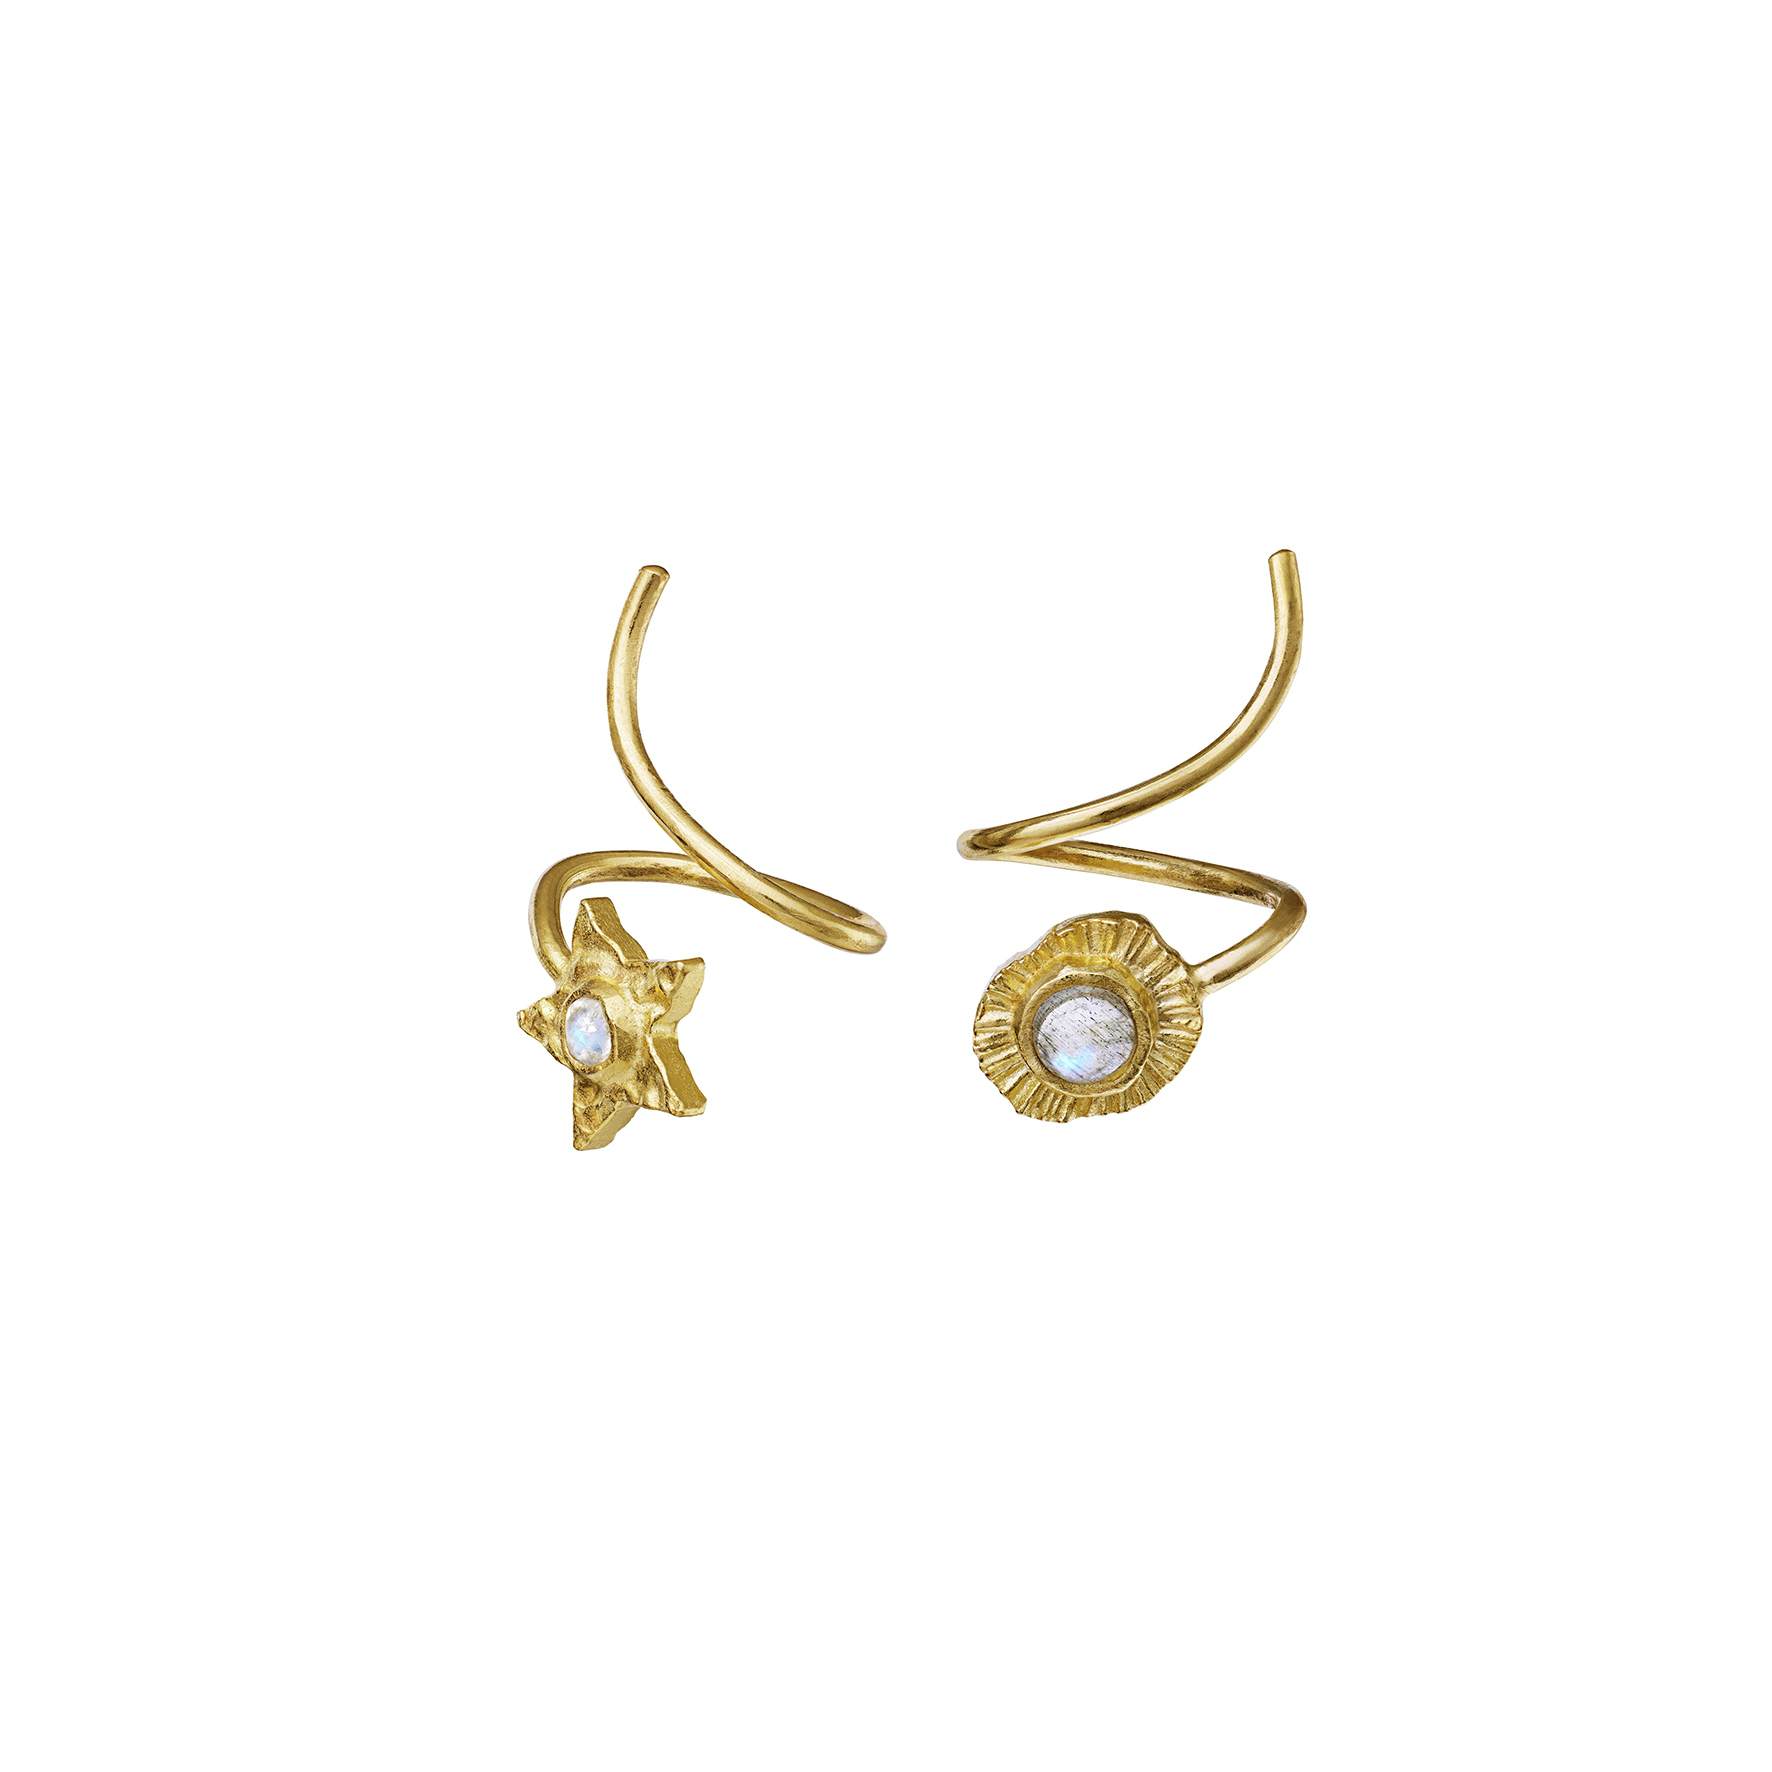 Sirius Earrings from Maanesten in Goldplated-Silver Sterling 925